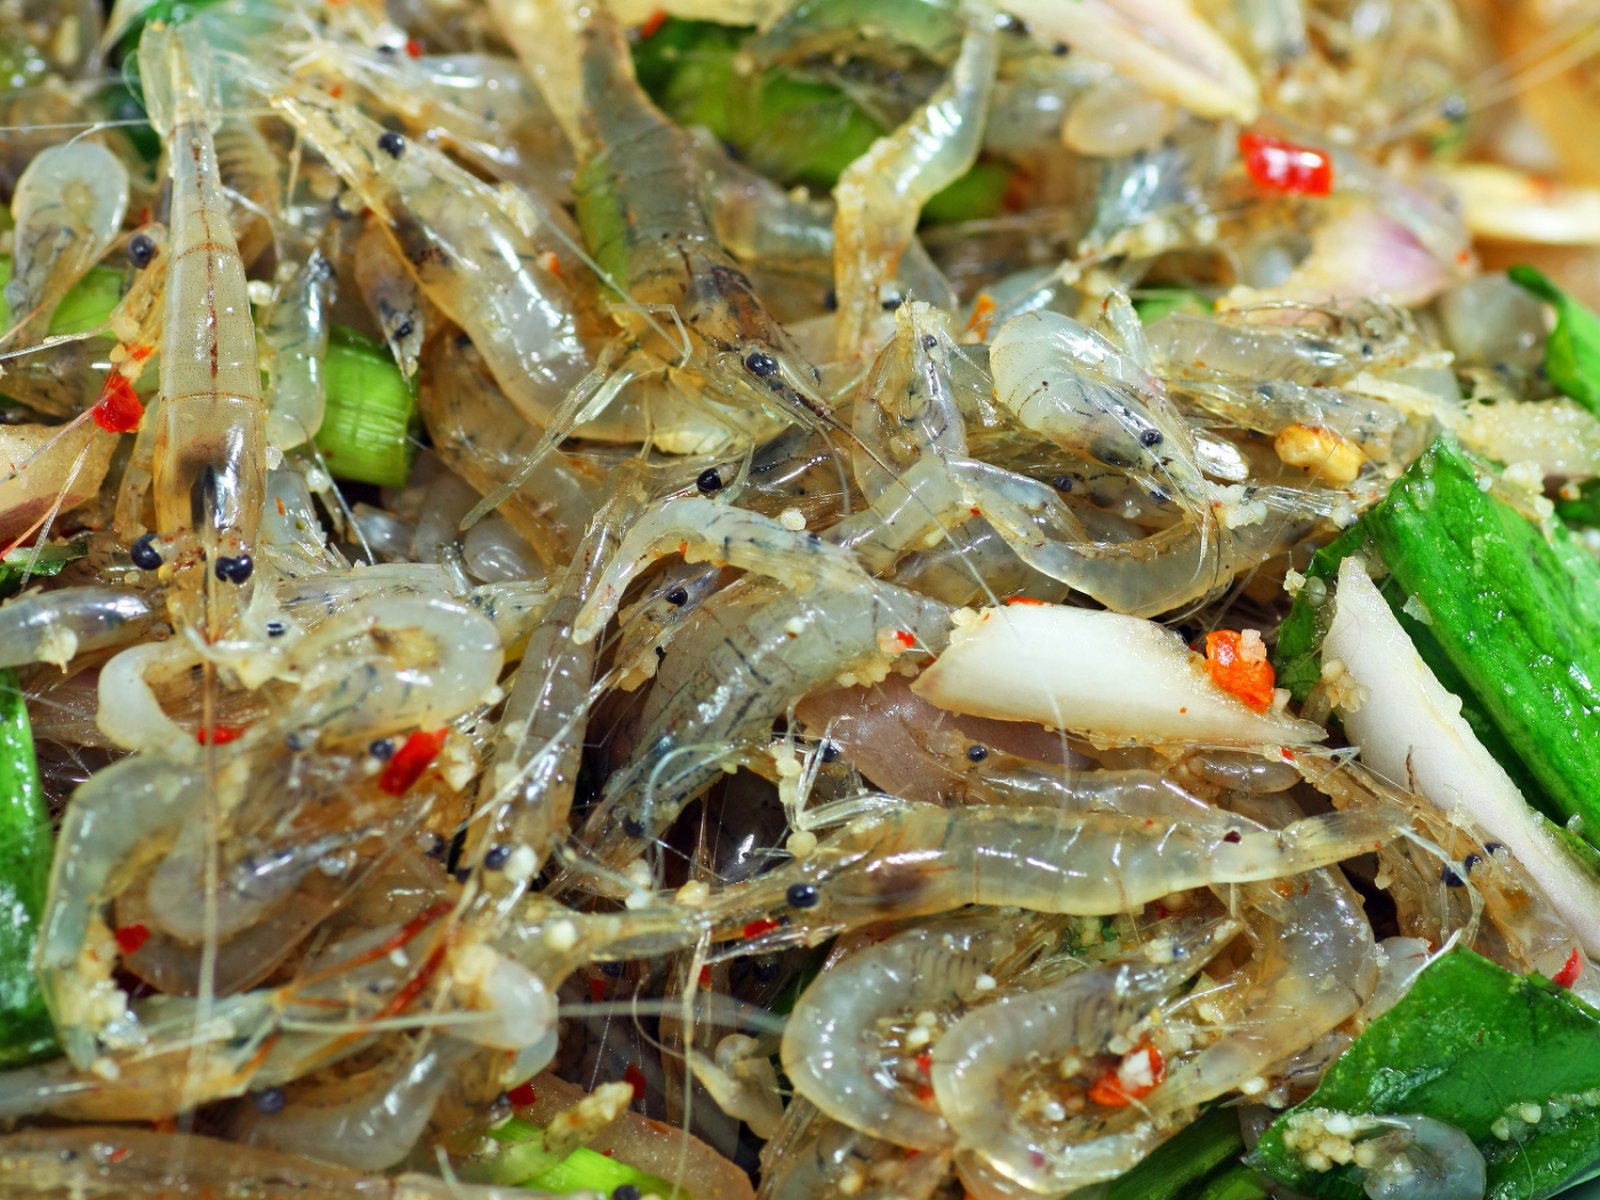 How to try eating dancing shrimp in Bangkok